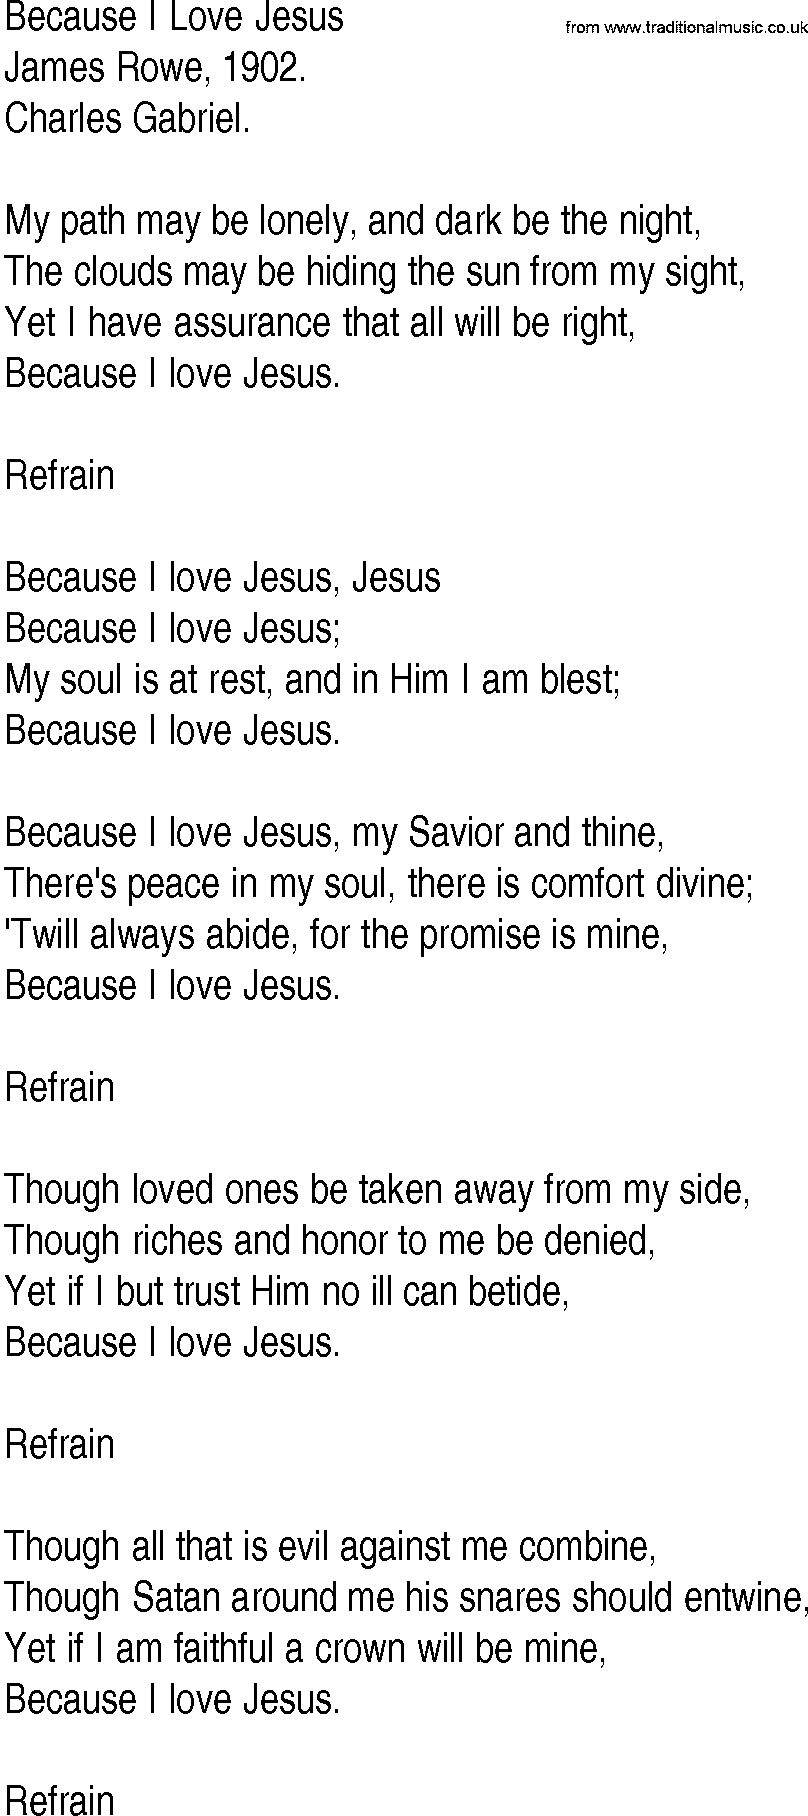 Hymn and Gospel Song: Because I Love Jesus by James Rowe lyrics